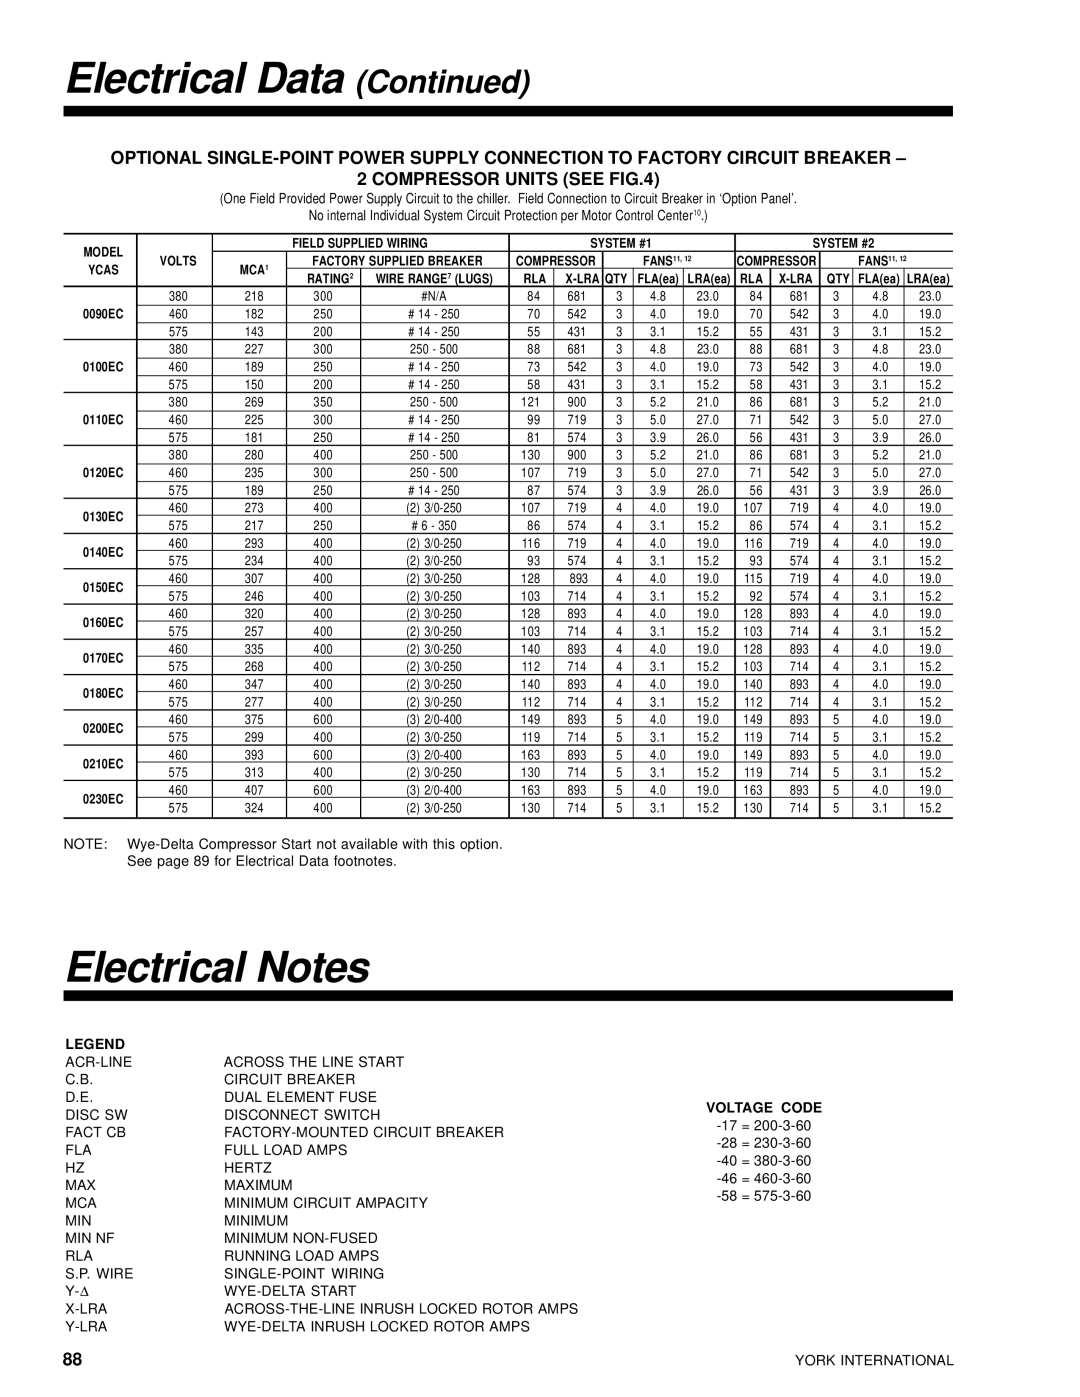 York 28971AR manual Electrical Notes, Rla Lra Qty 